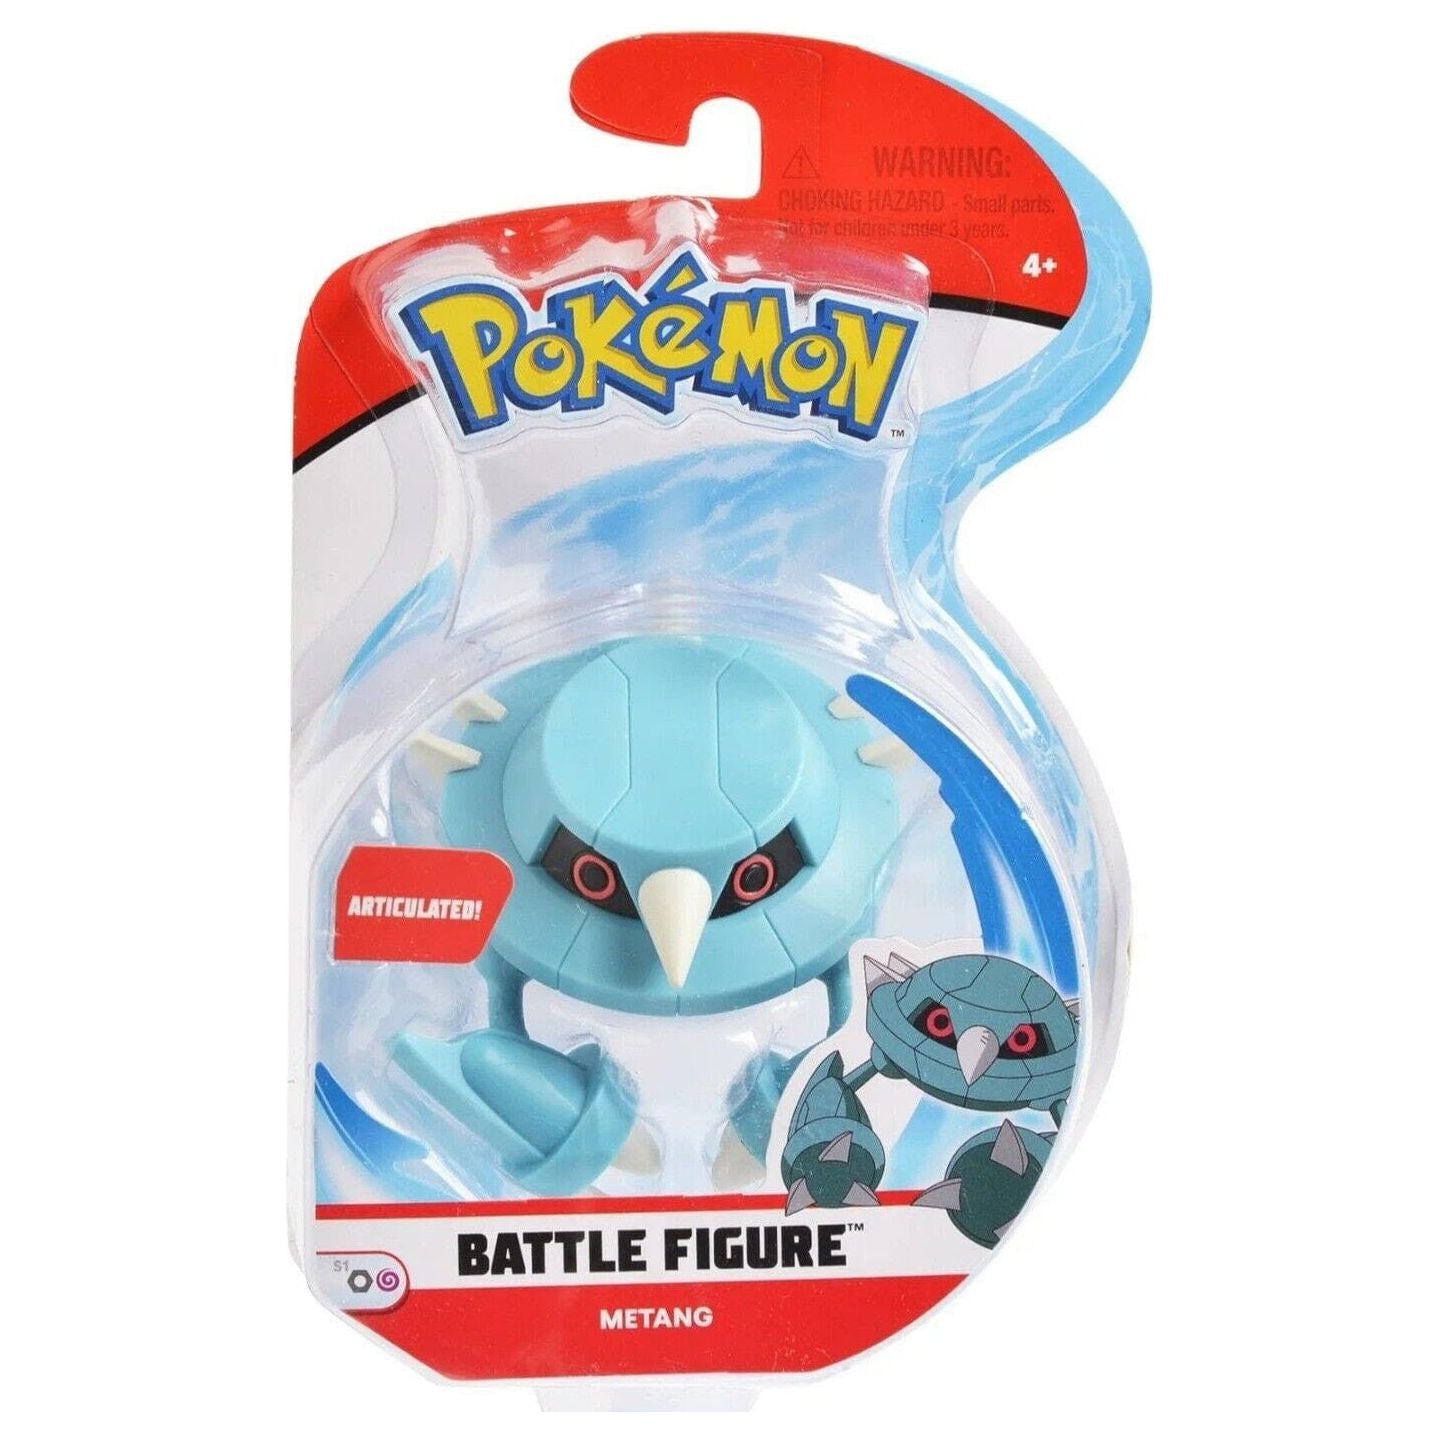 Pokemon - Battle Figure Pack Minifiguren Sortiment 5 cm, Spielfigur, Actionfigur